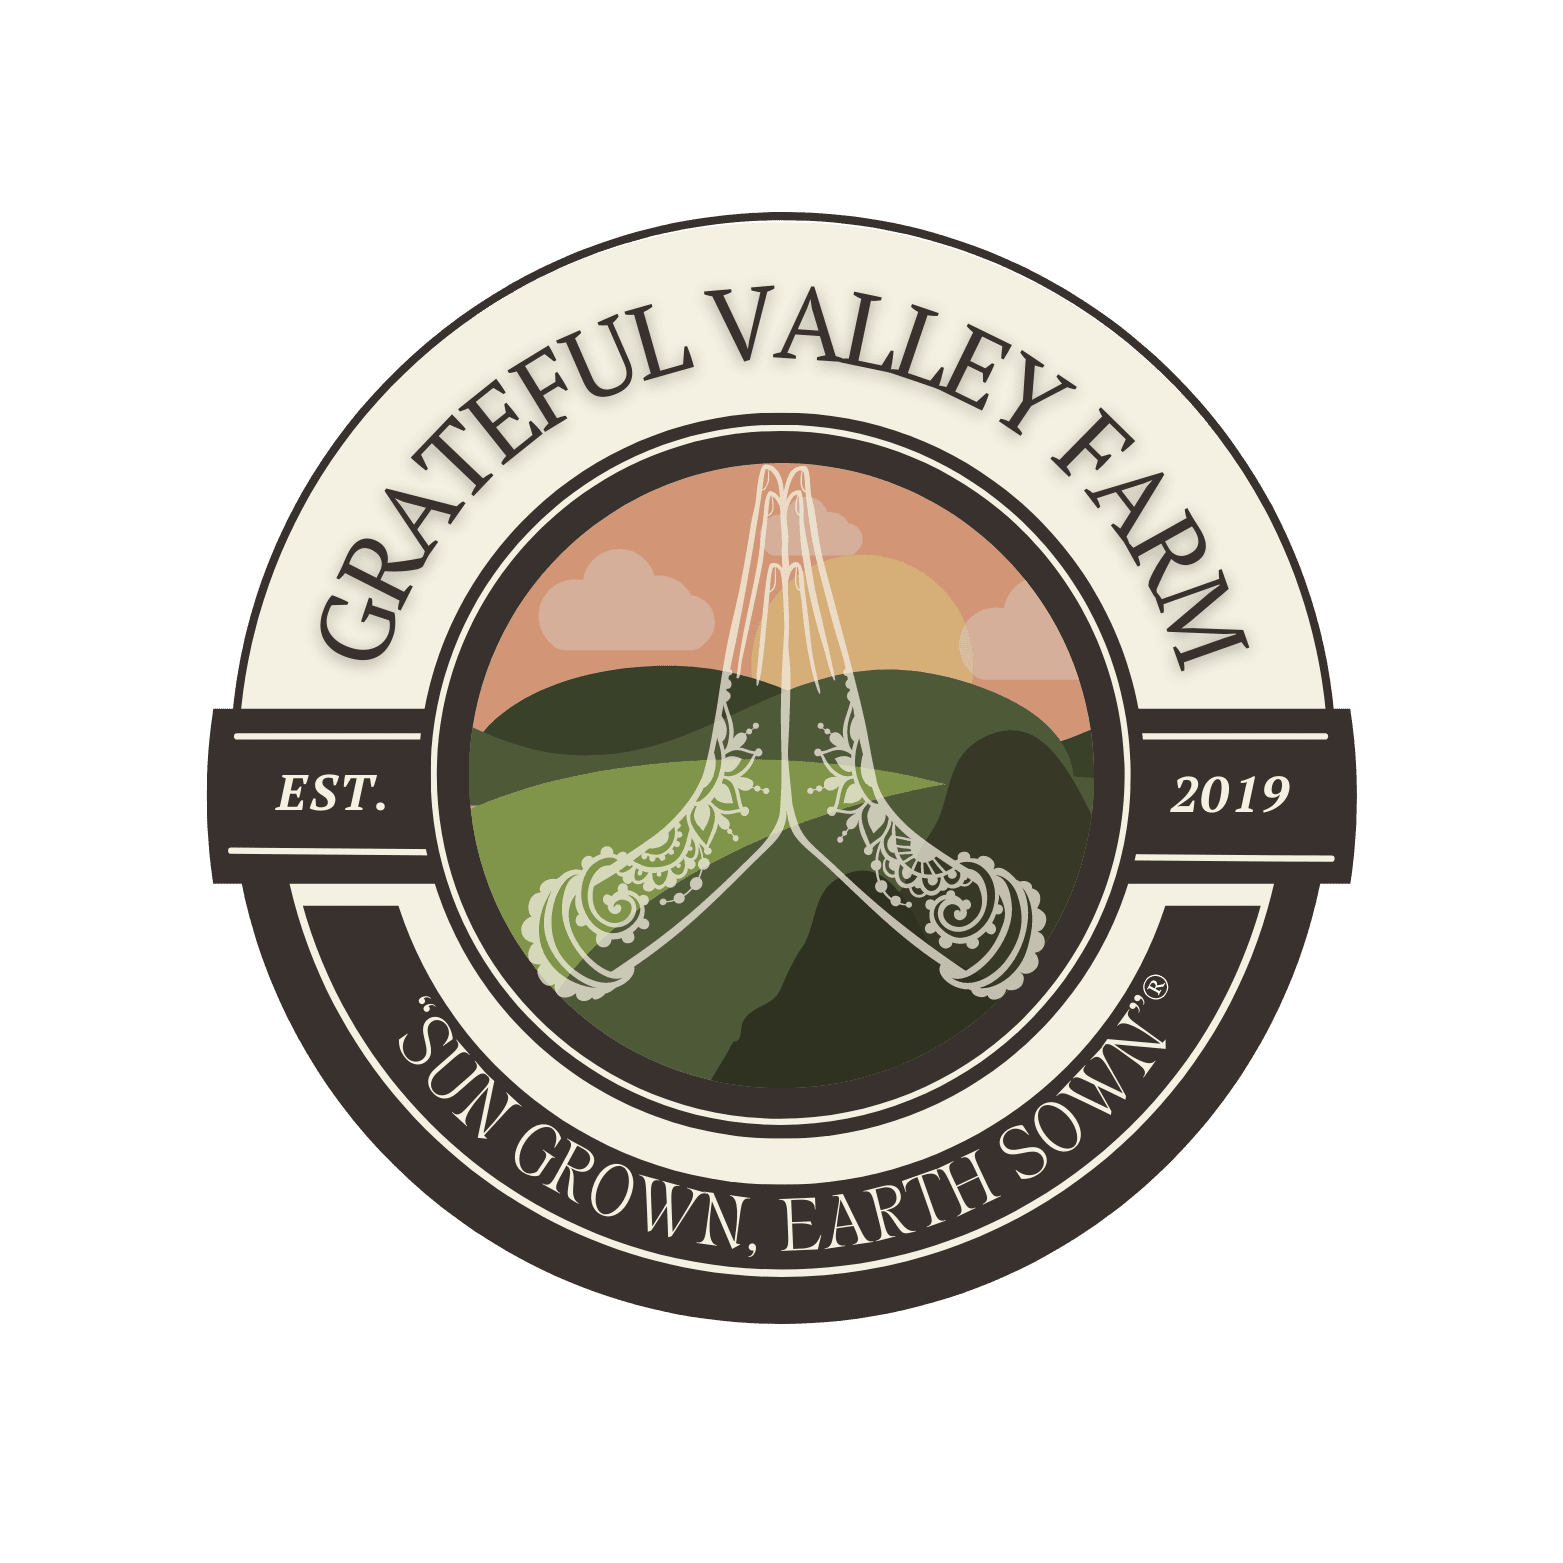 Grateful Valley Farm